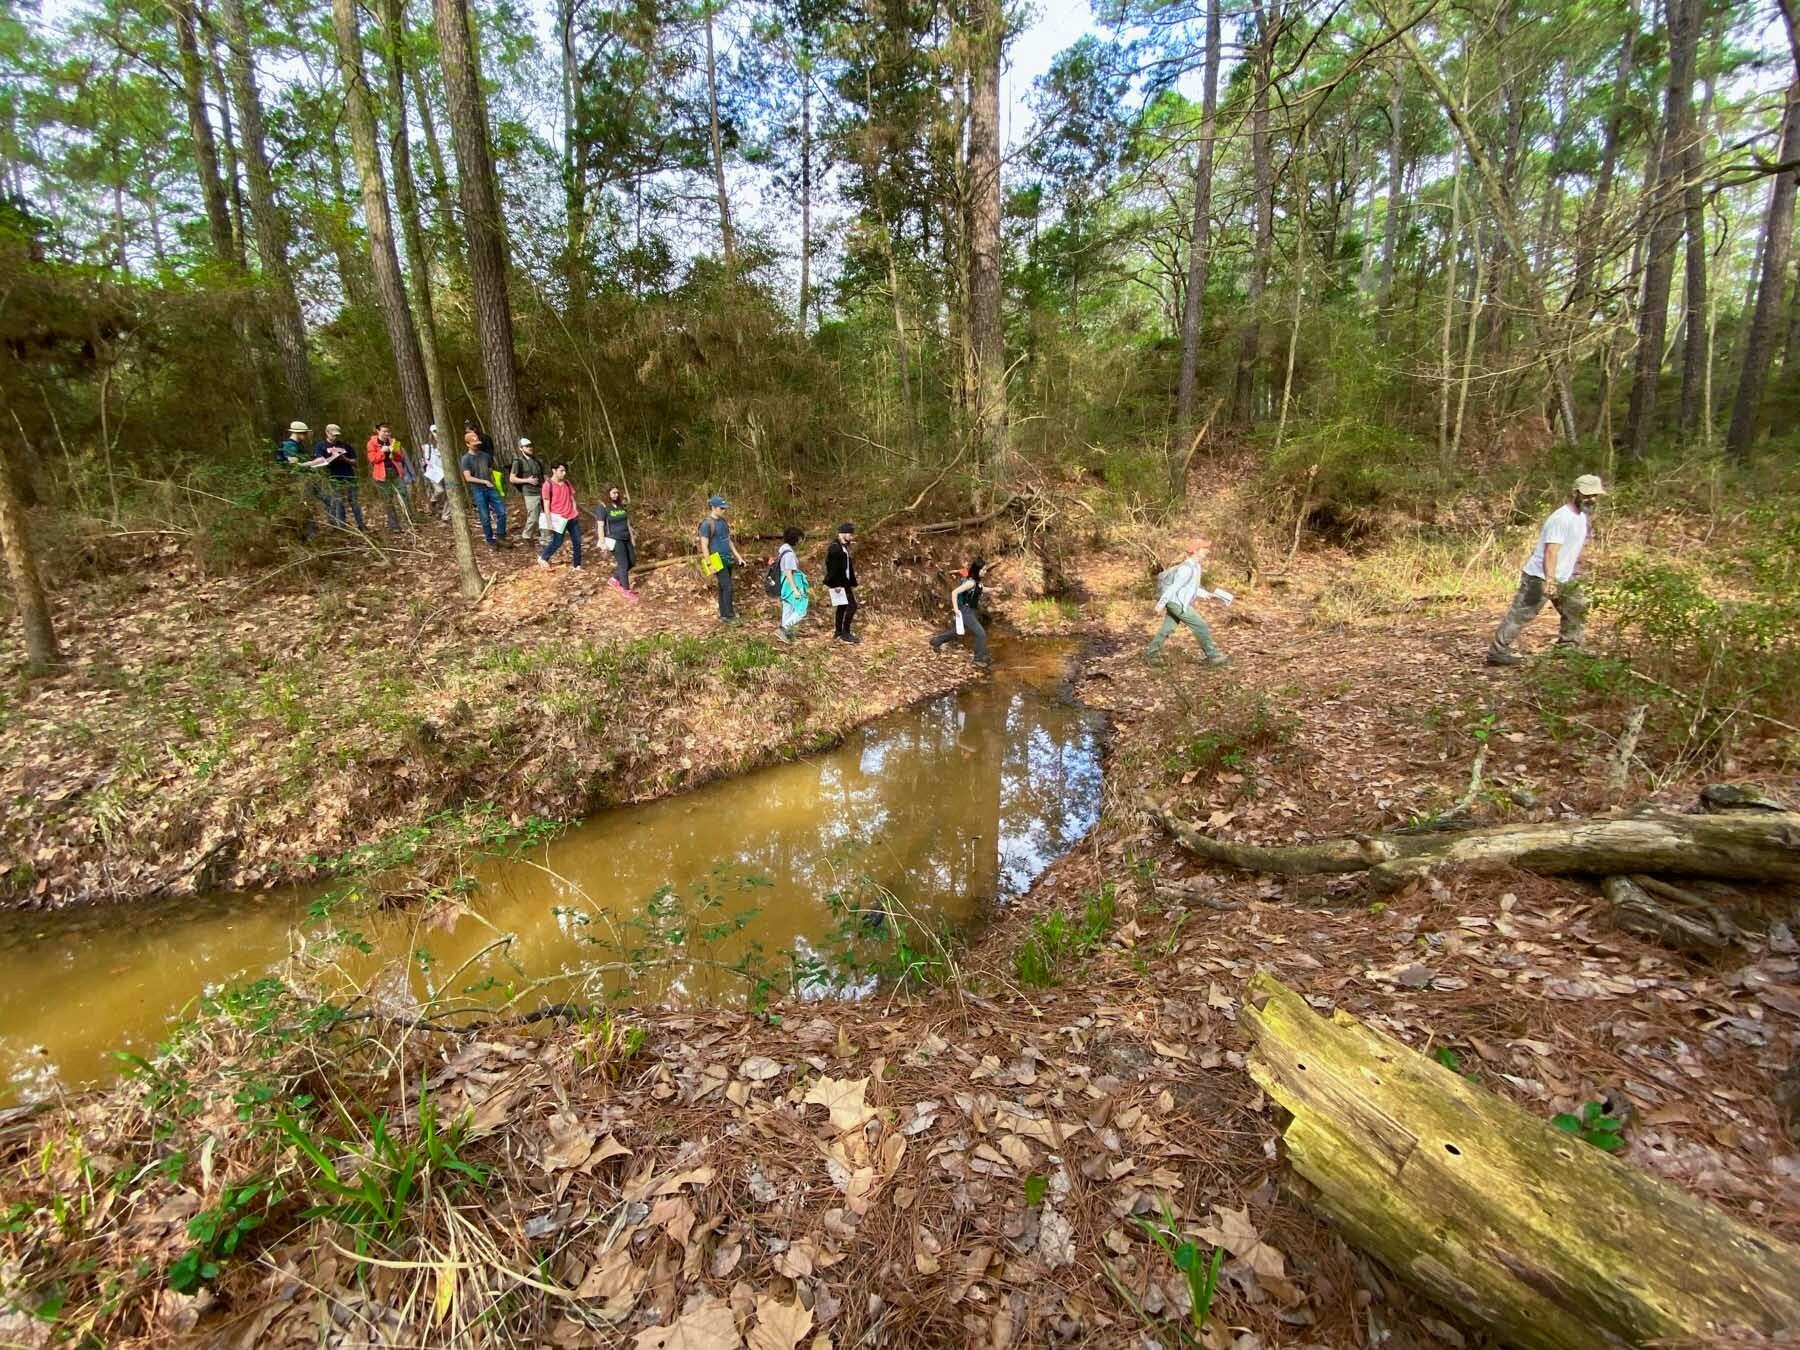 A class walks across a creek in a verdant forest area